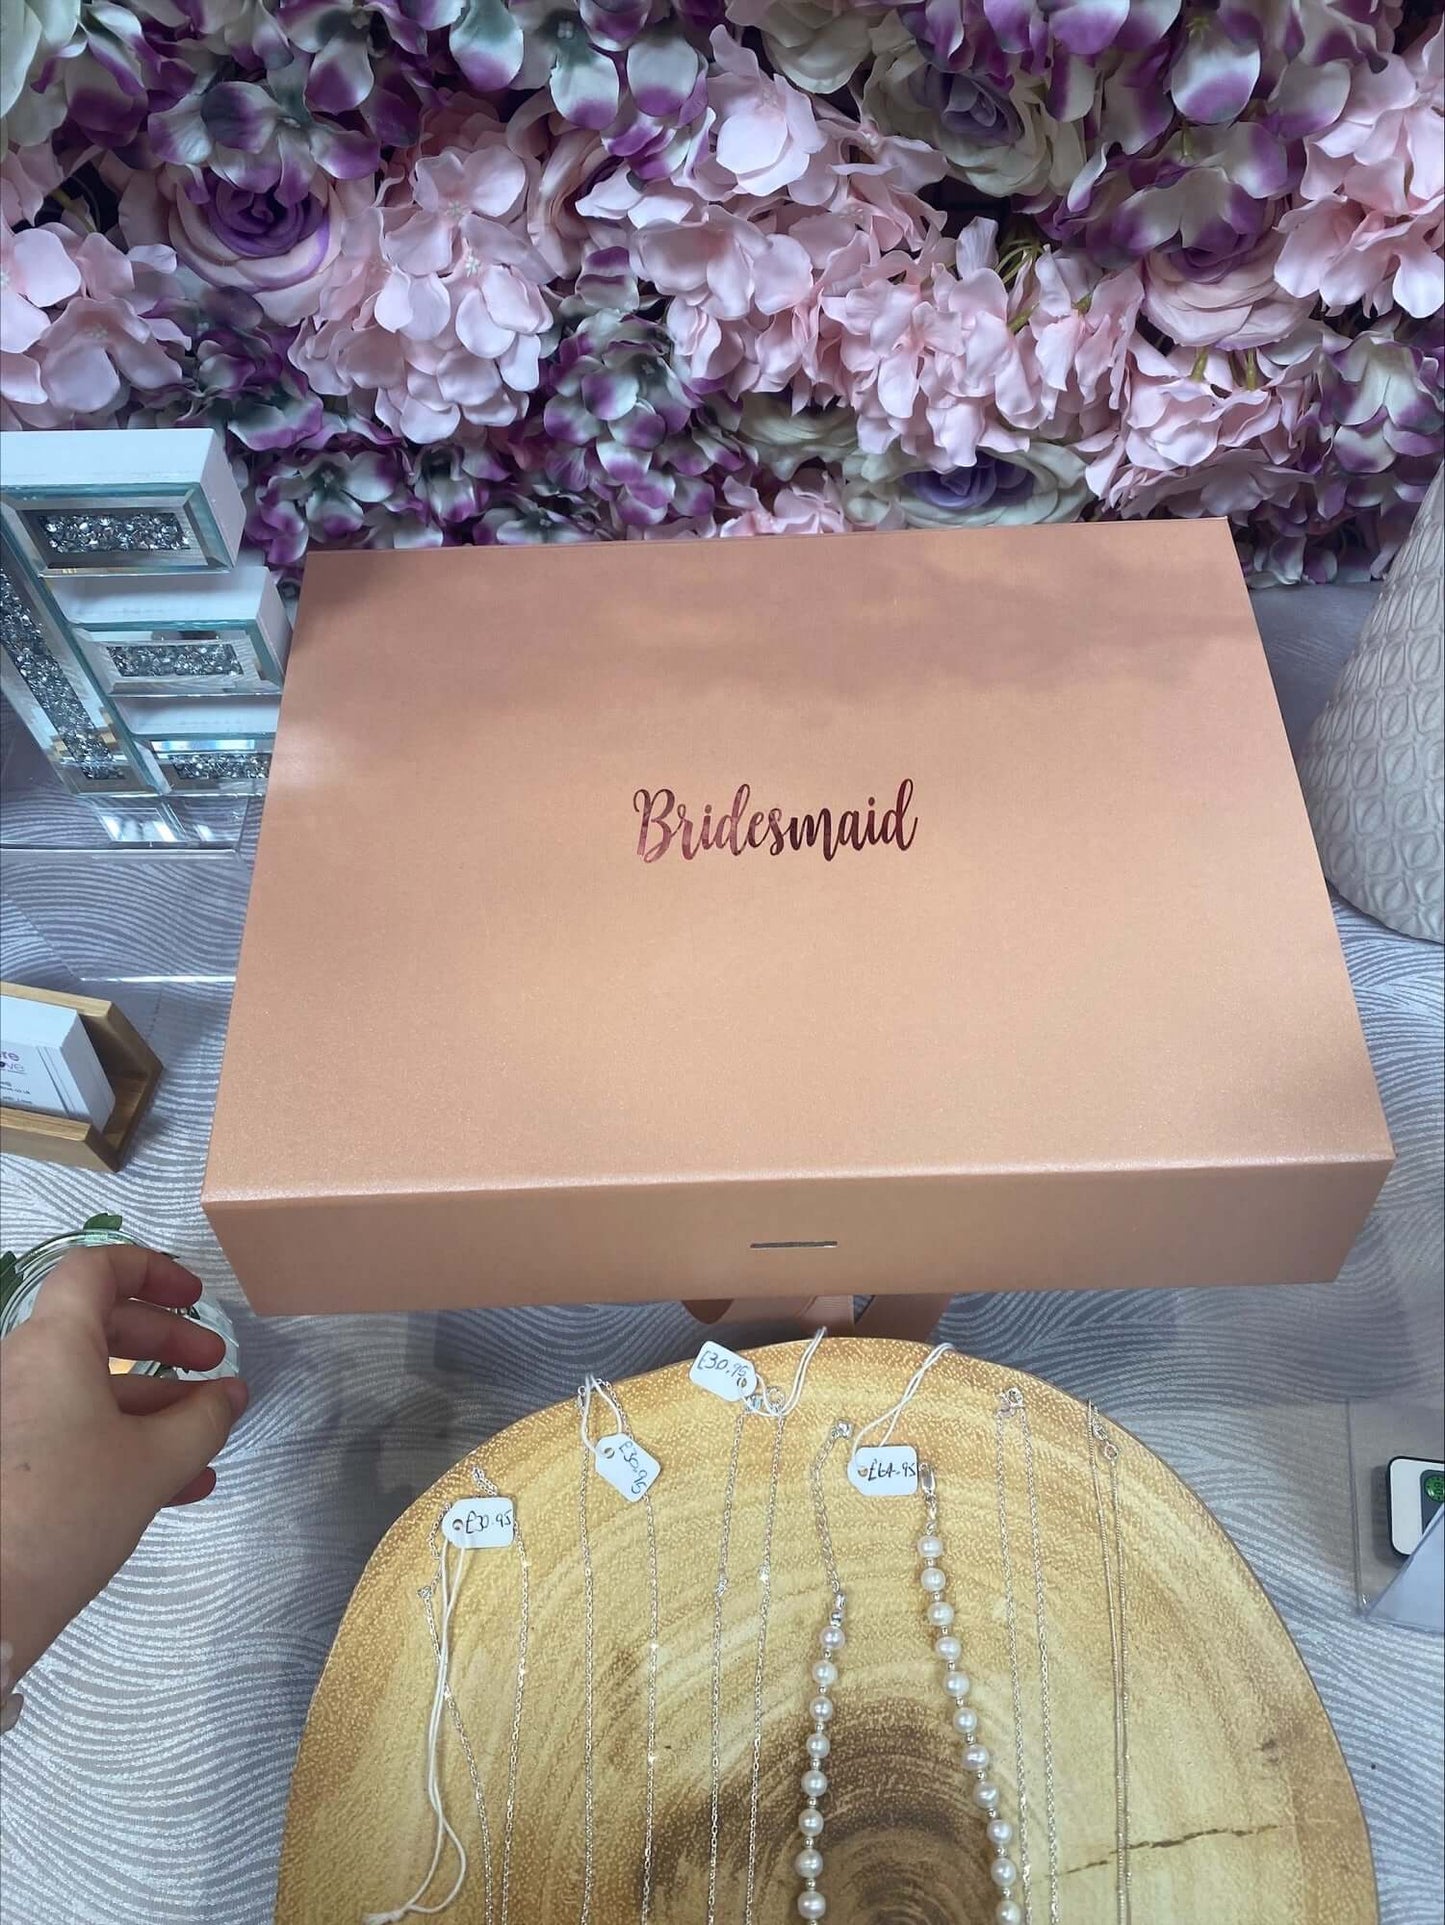 Gift Box for Bridesmaid, WIll you be my bridesmaid gift box?